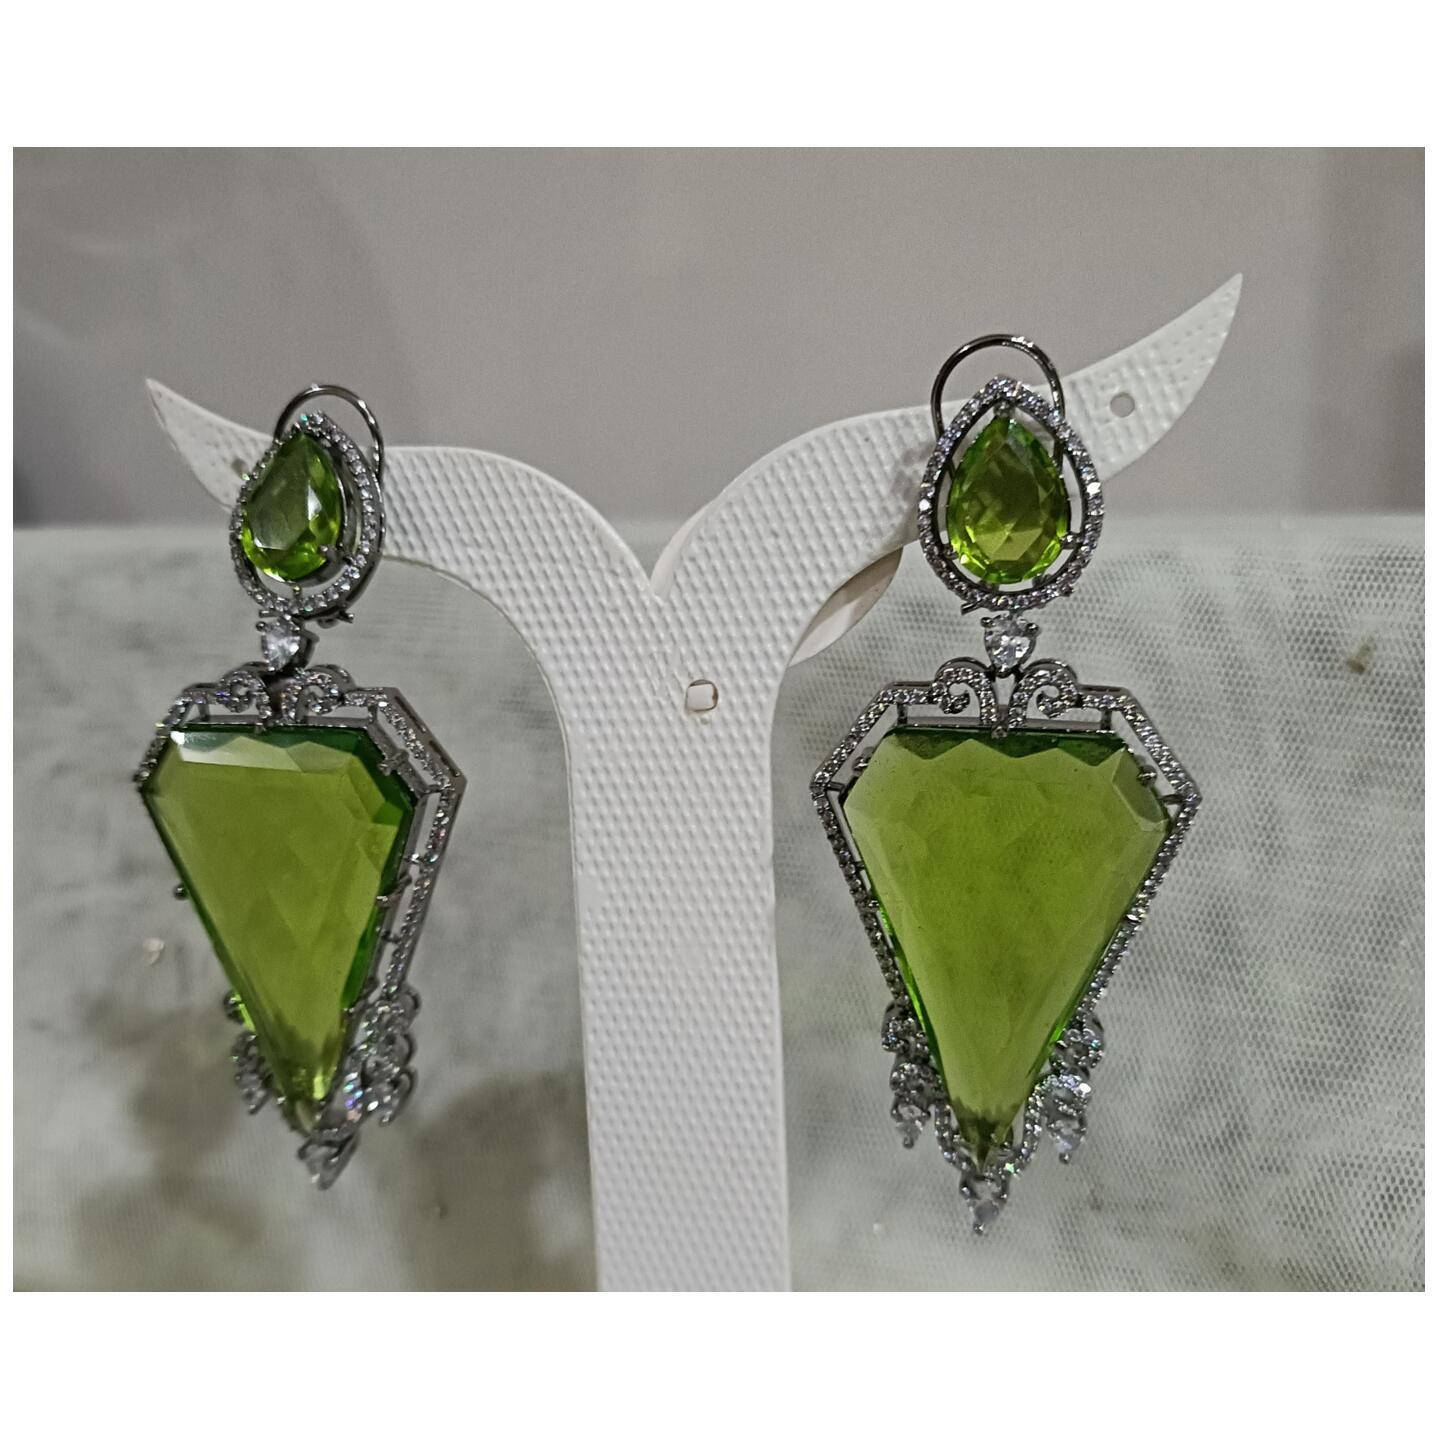 AD (American Diamond) Green Crystal Earring